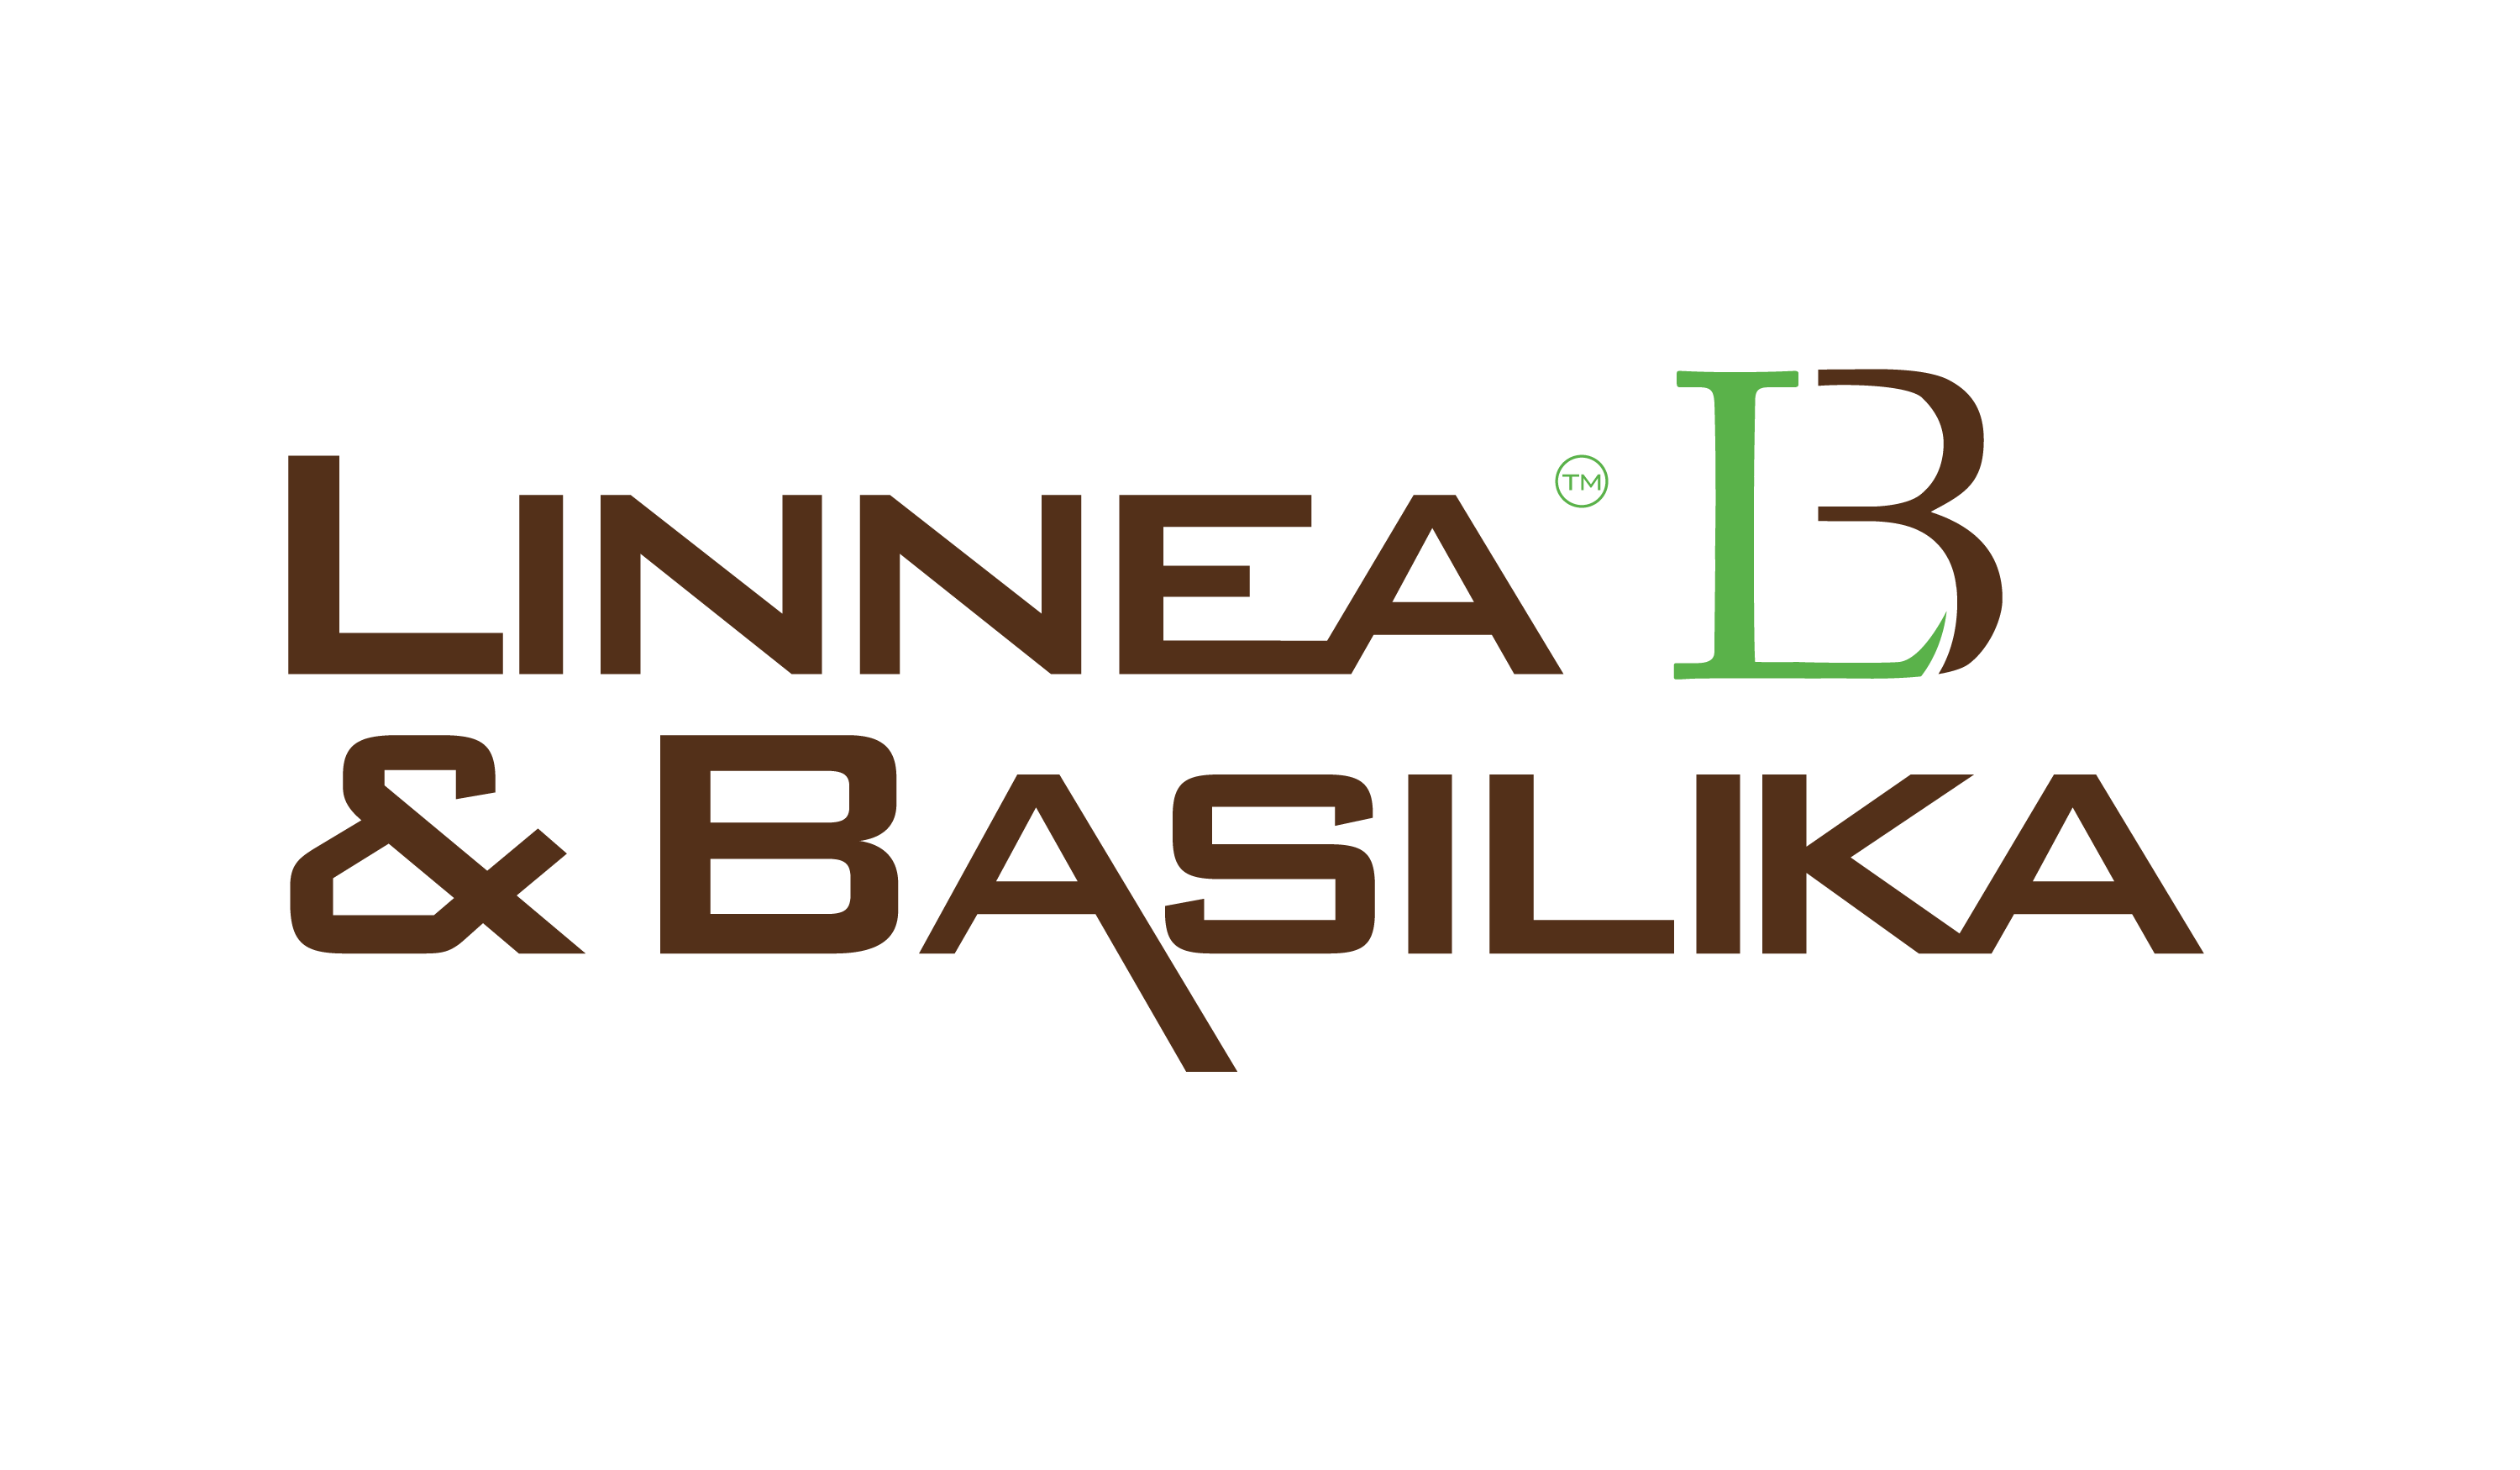 Linnea & Basilika